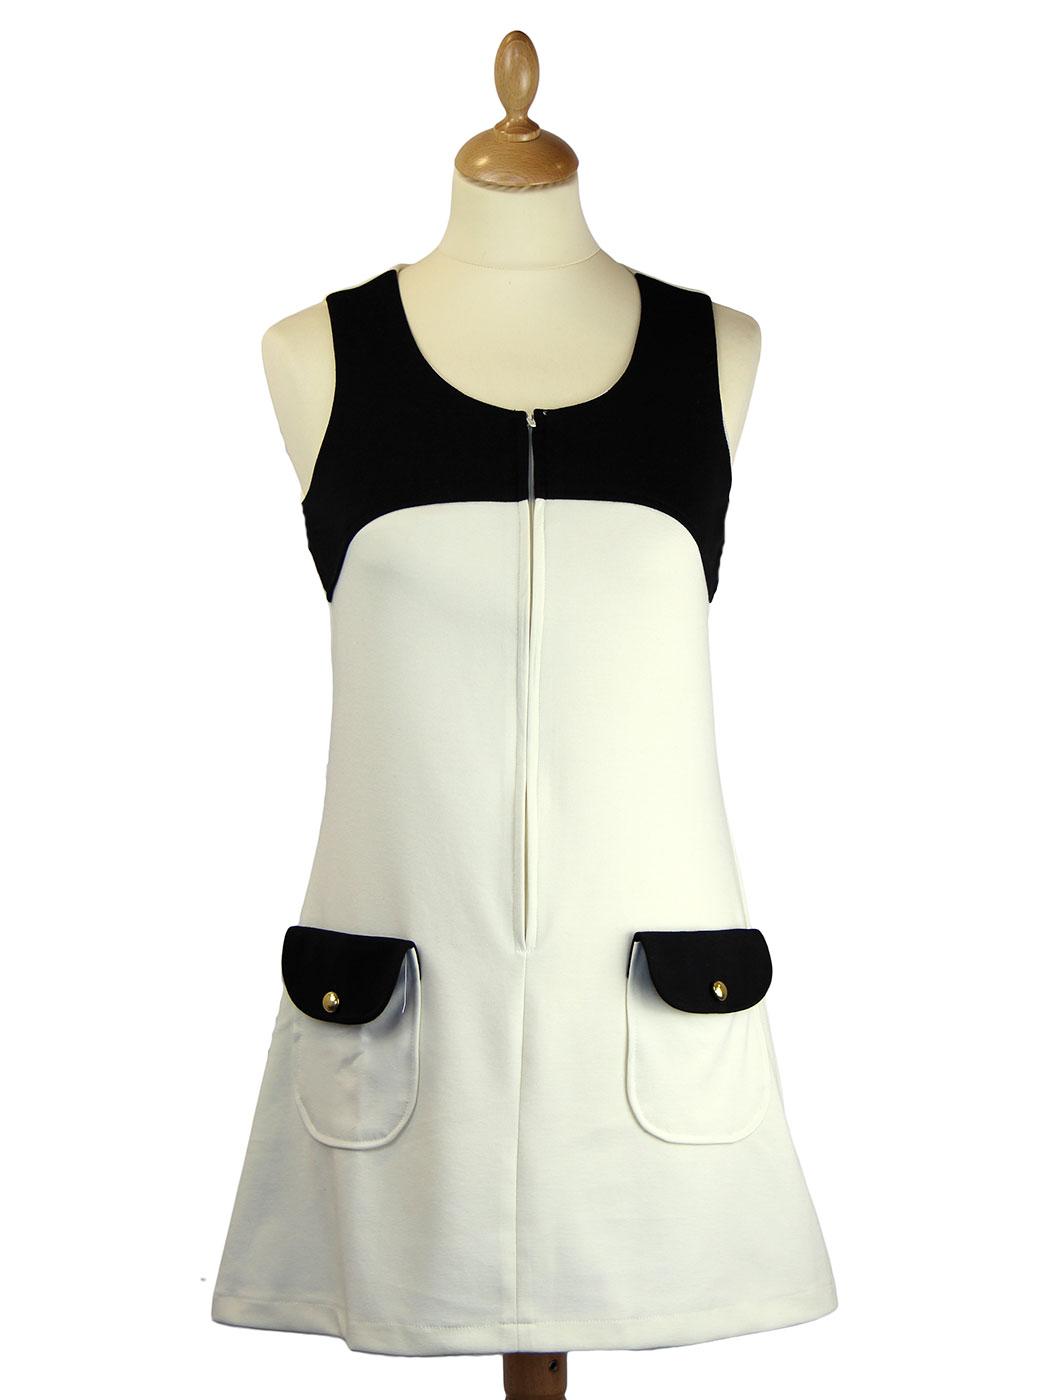 Edie Retro 1960s Mod Dress in White/Black Top